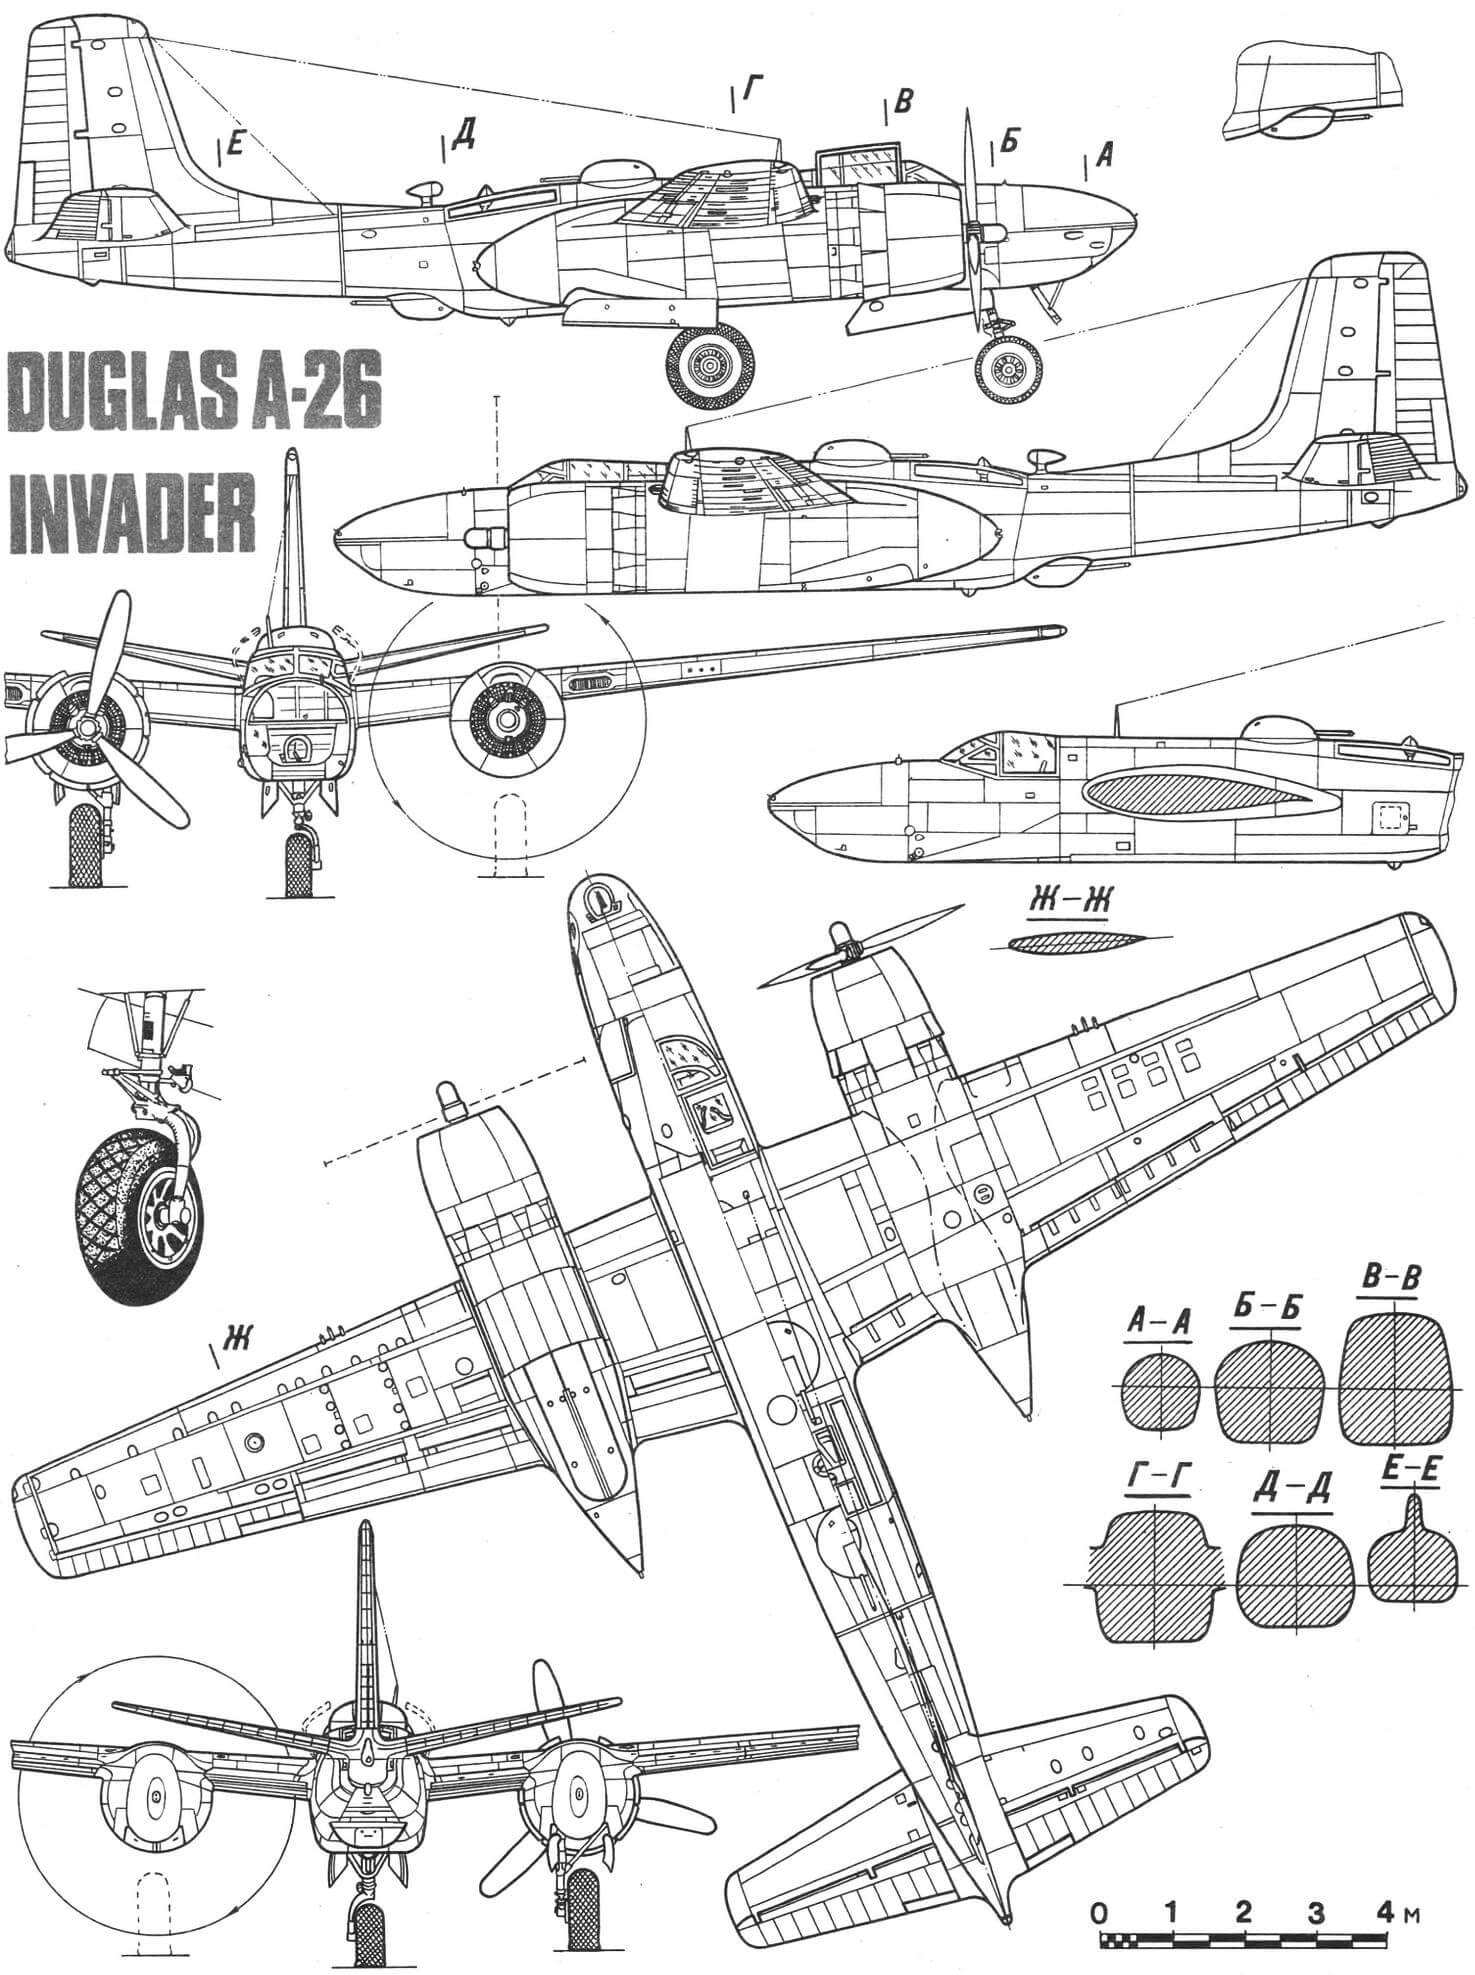 DUGLAS A-26 INVADER